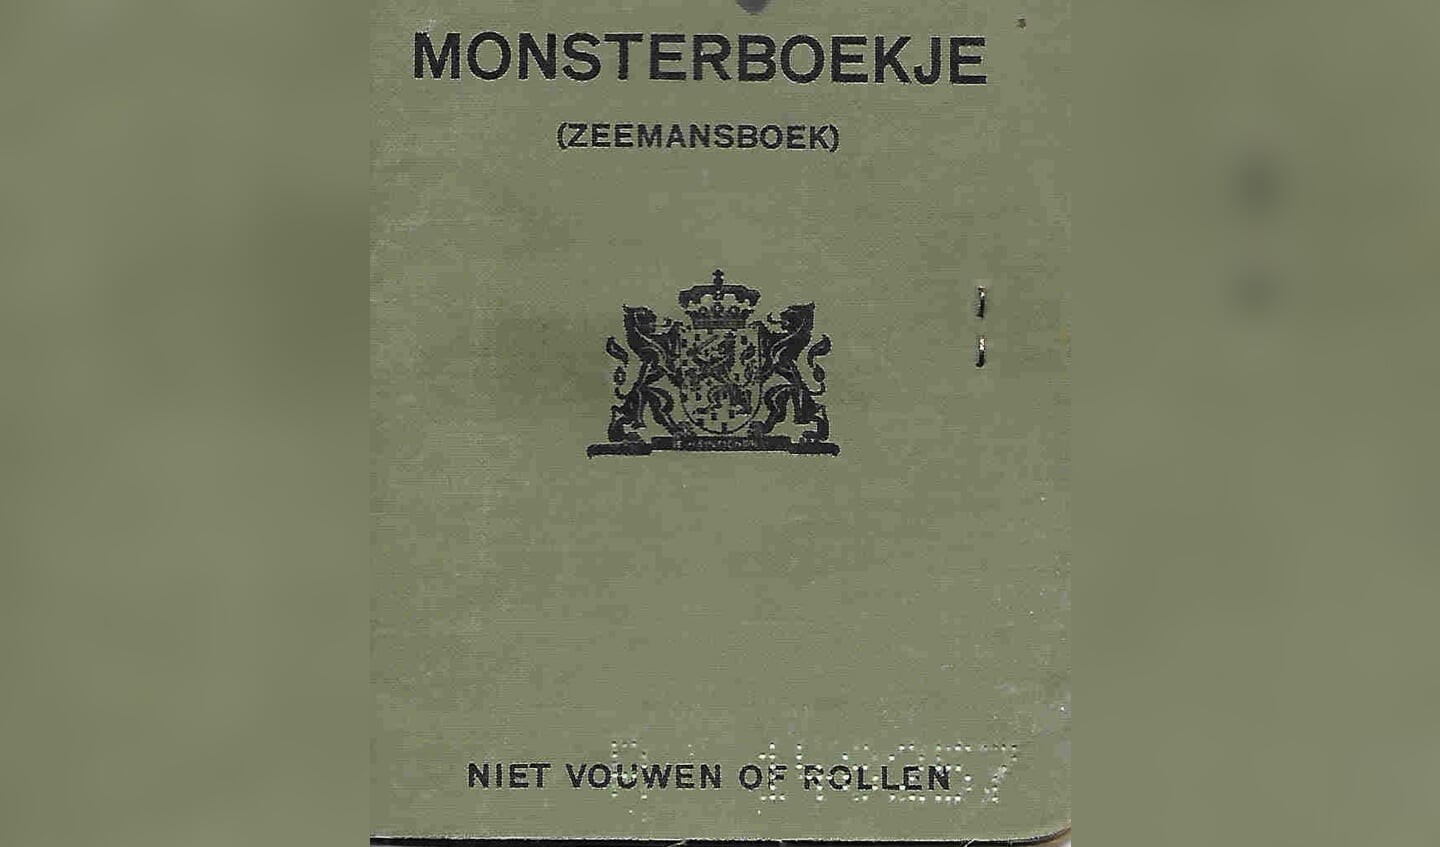 monsterboekje ss Rotterdam